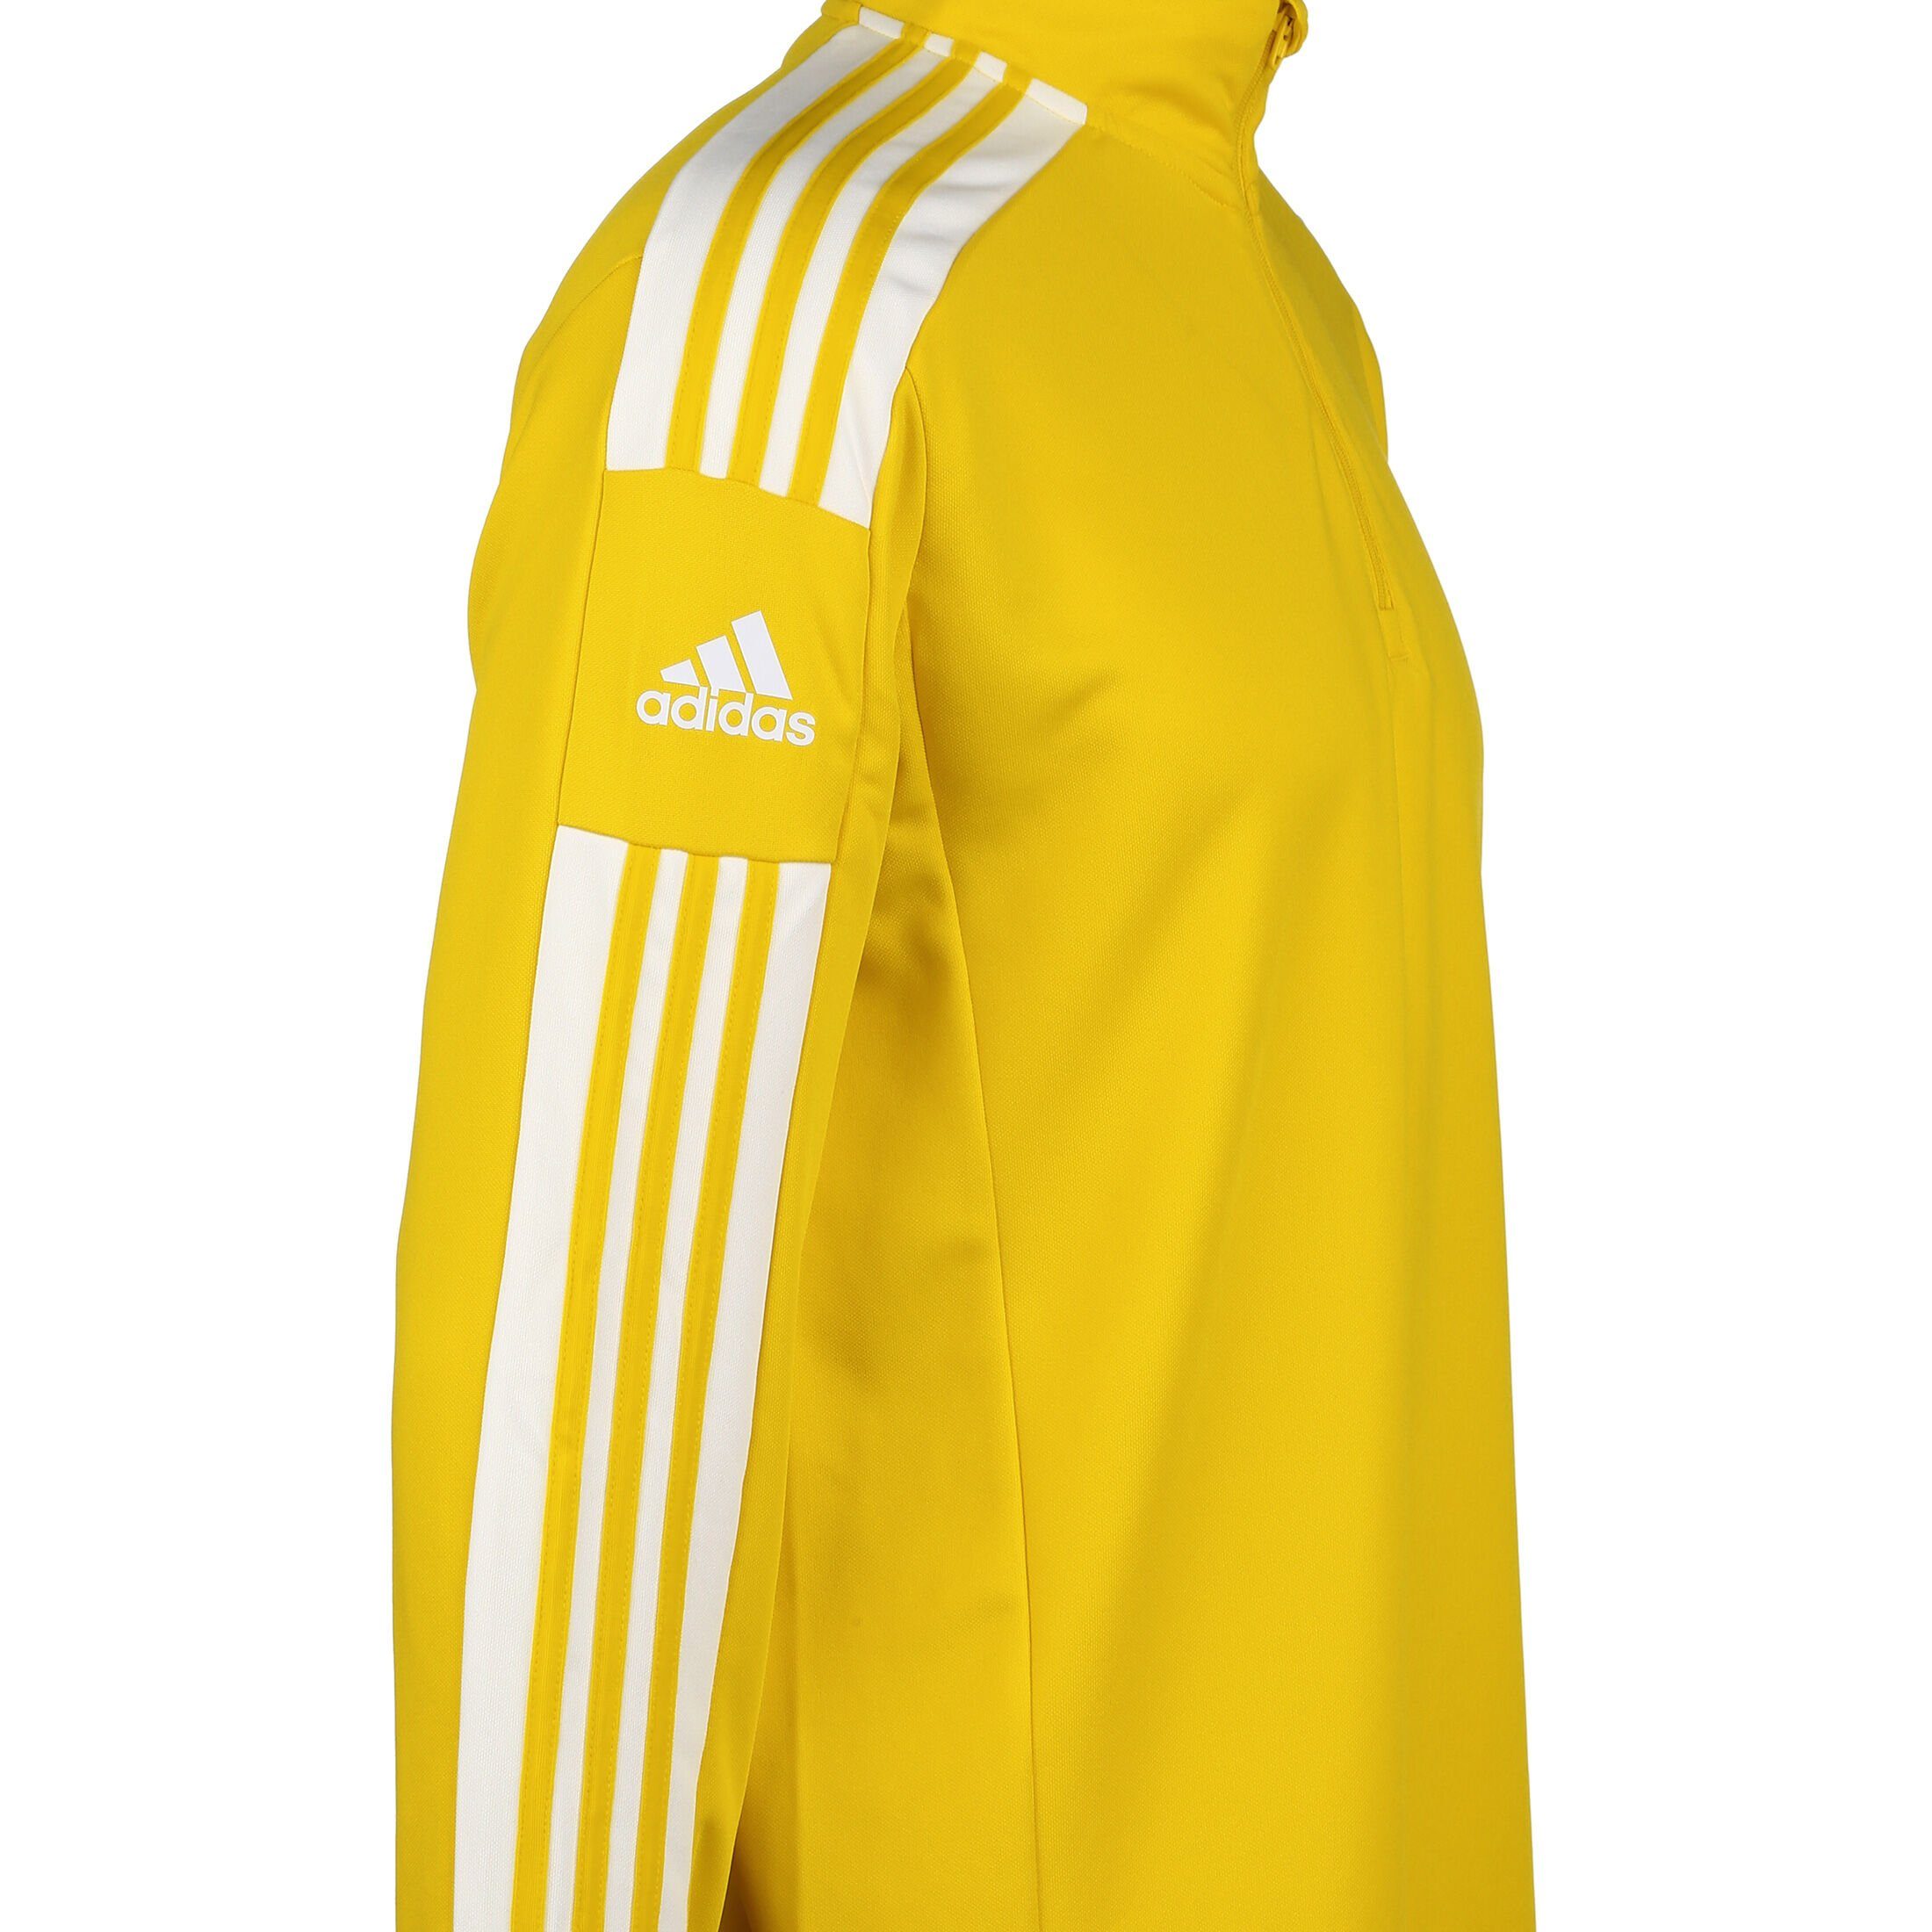 Trainingssweat Performance adidas Sweatshirt Herren gelb Squadra / weiß 21